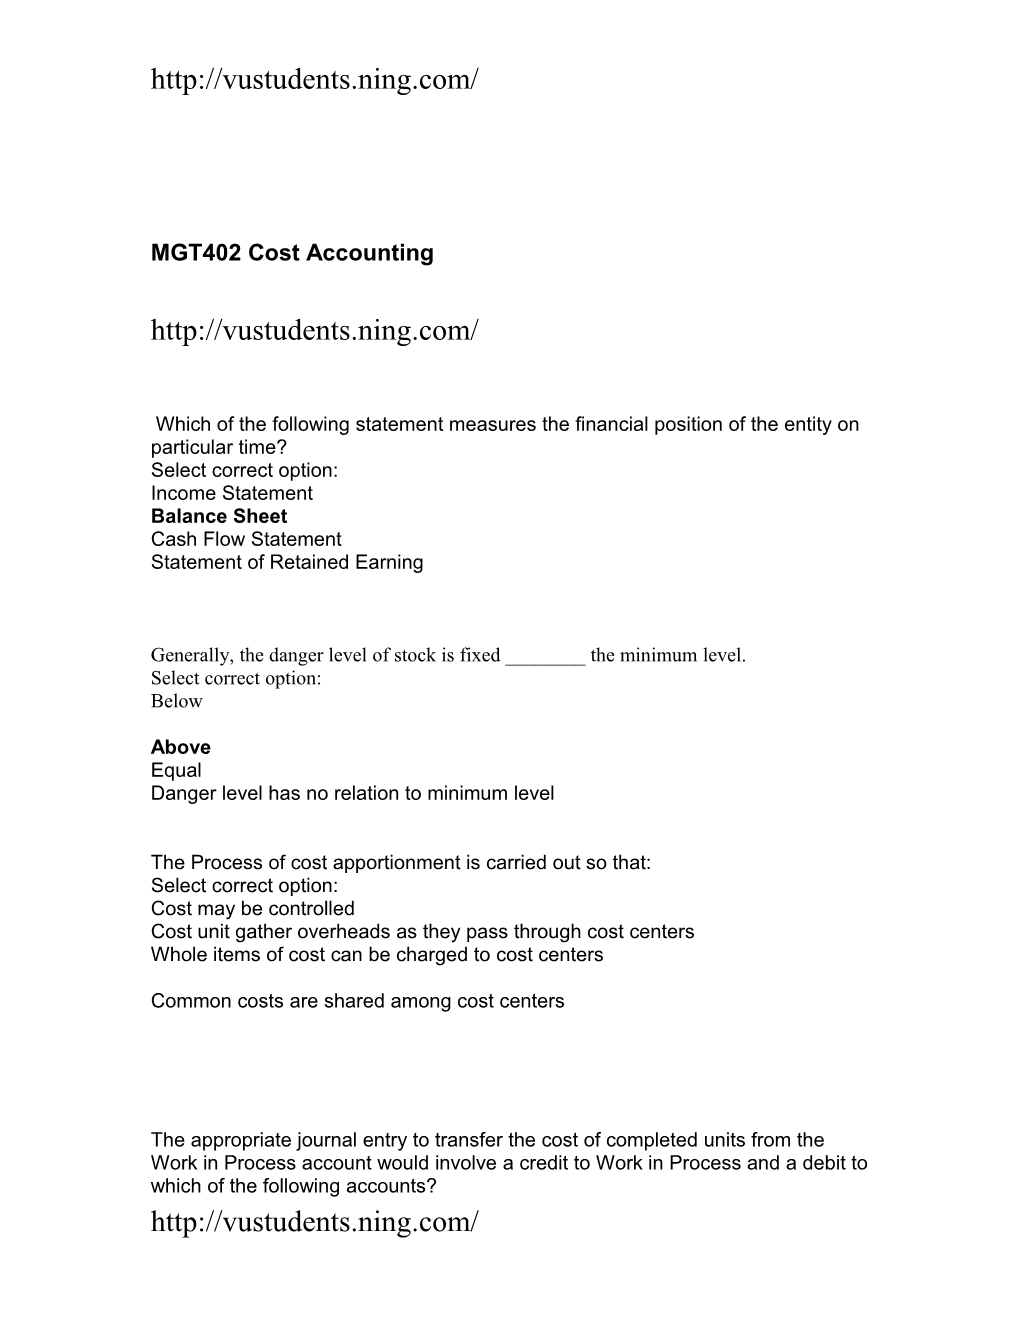 MGT402 Cost Accounting